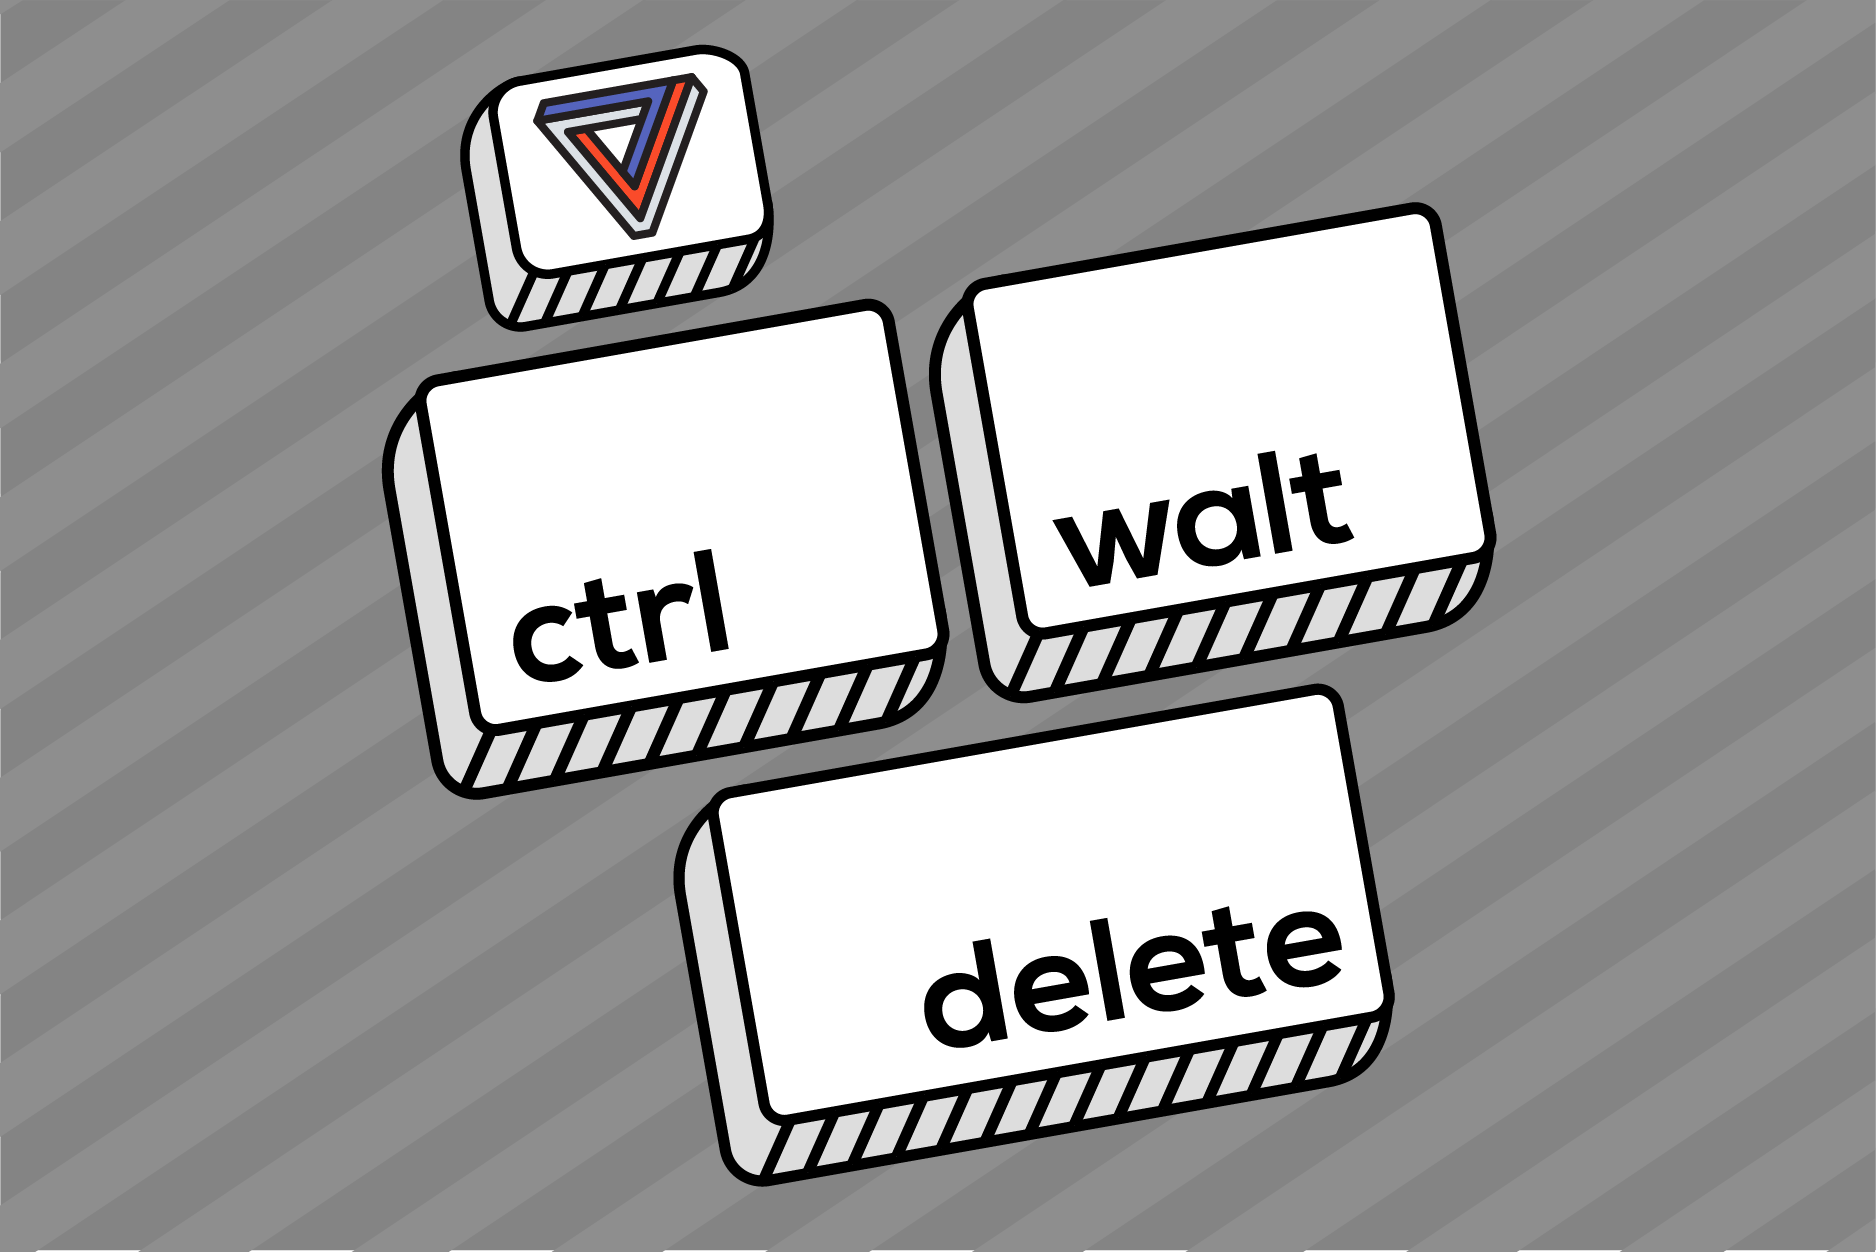 ctrl-walt-delete-logo-wider